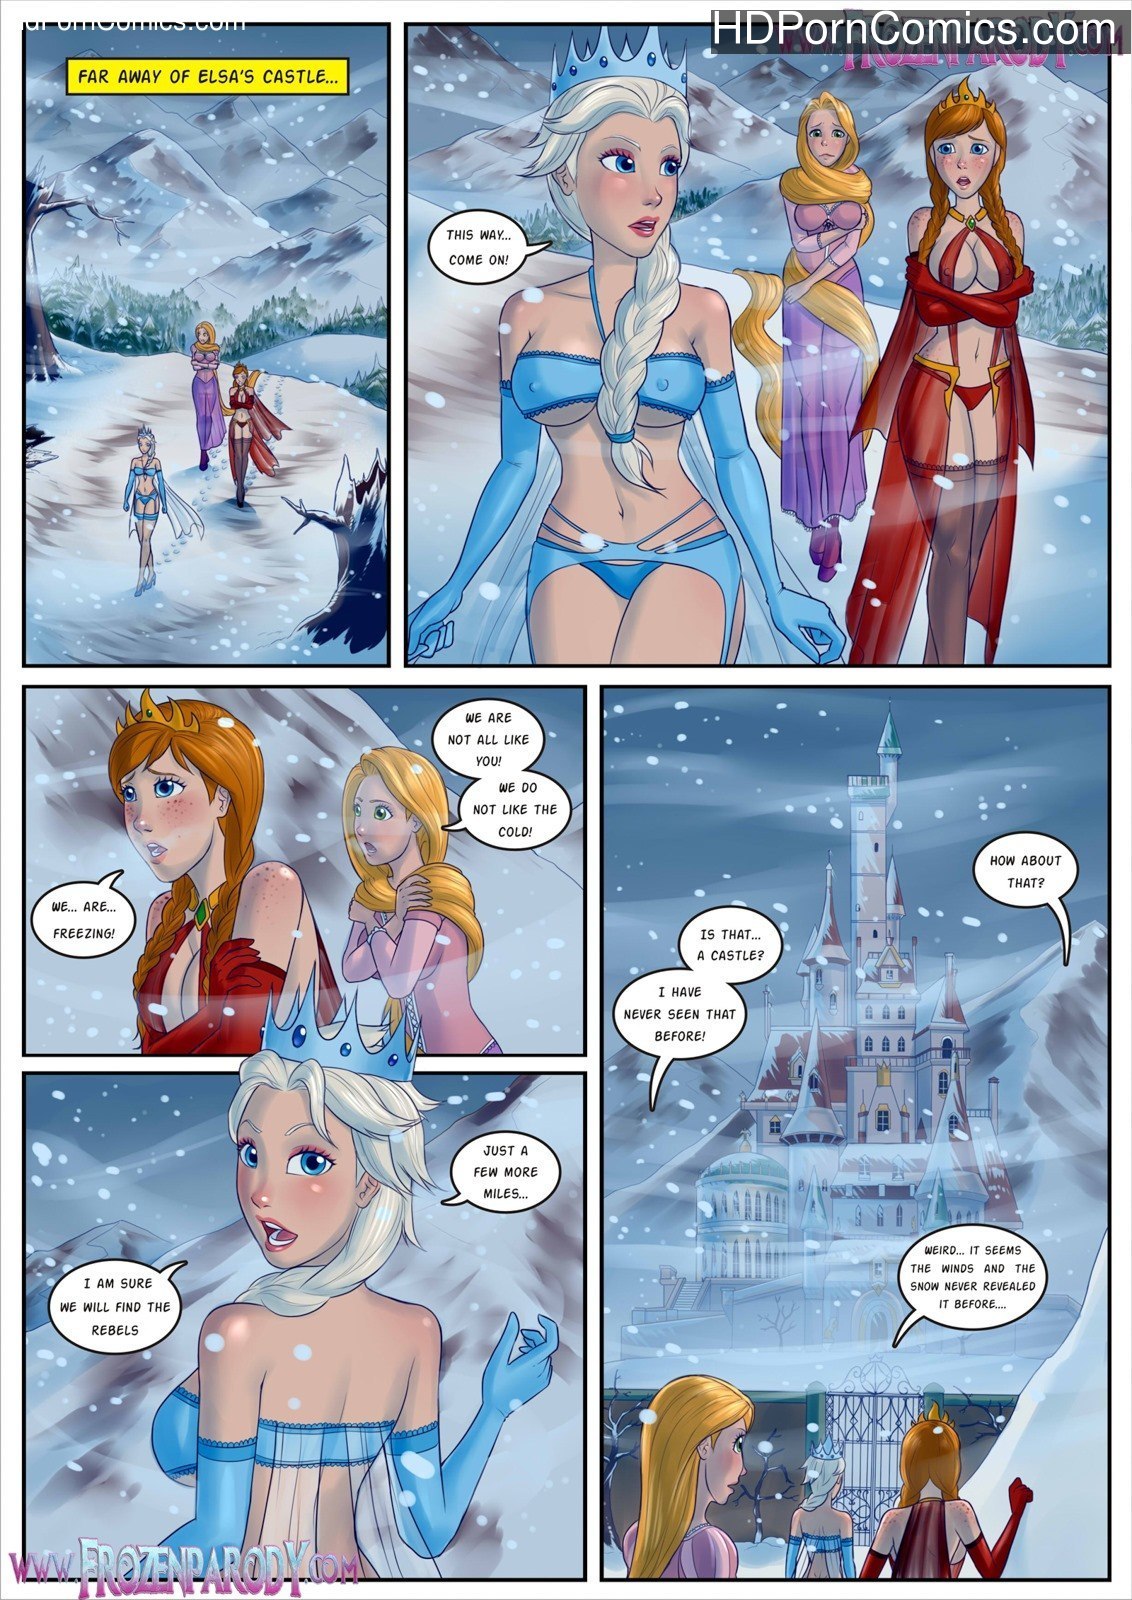 Cartoon Freezing Porn - Frozen Parody 13- Beauty And Beast free Cartoon Porn Comic - HD Porn Comics